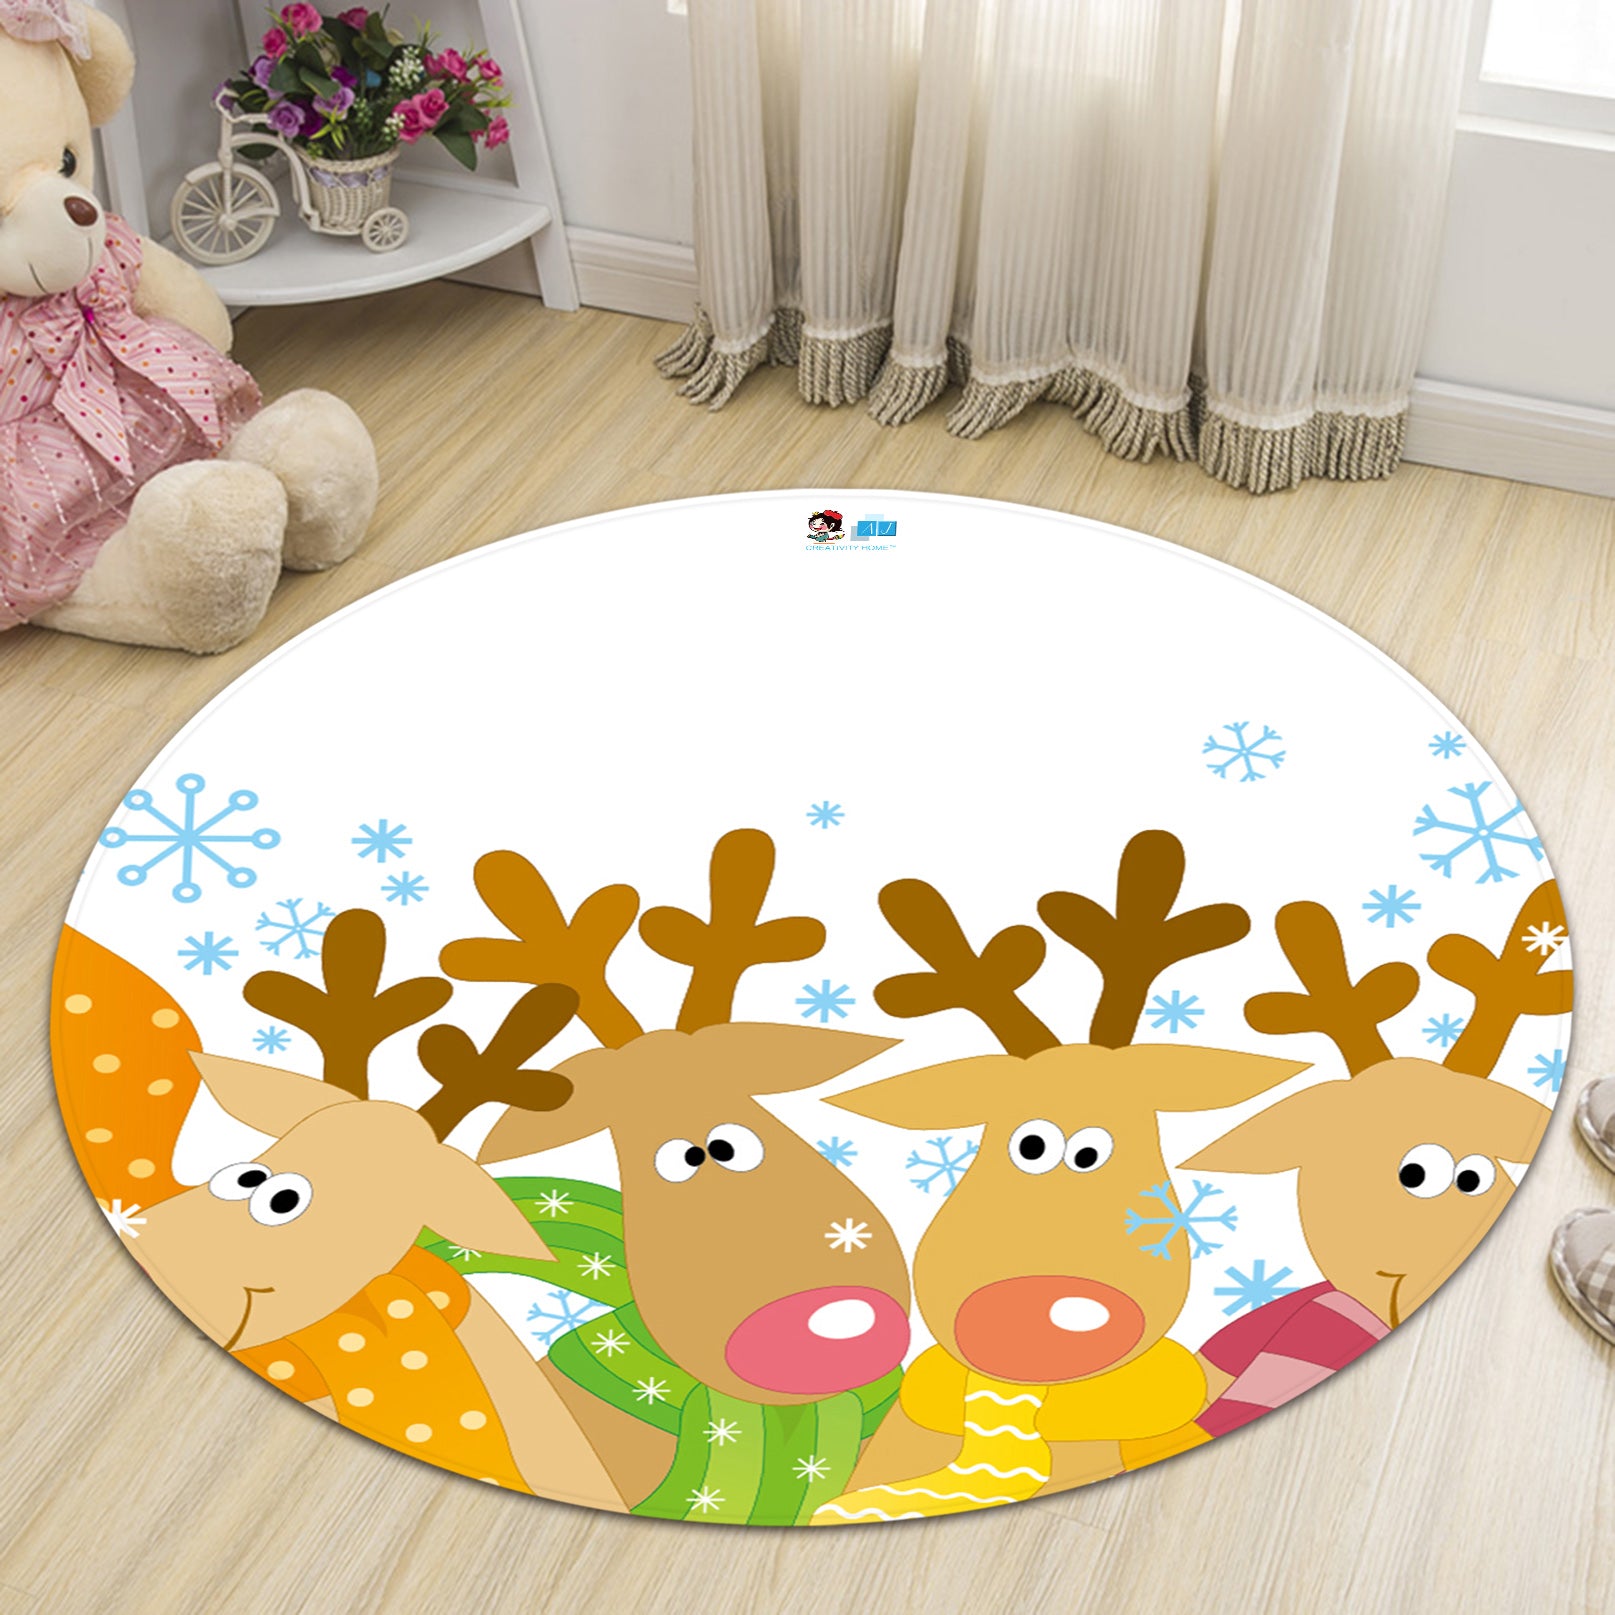 3D Cartoon Deer 65222 Christmas Round Non Slip Rug Mat Xmas